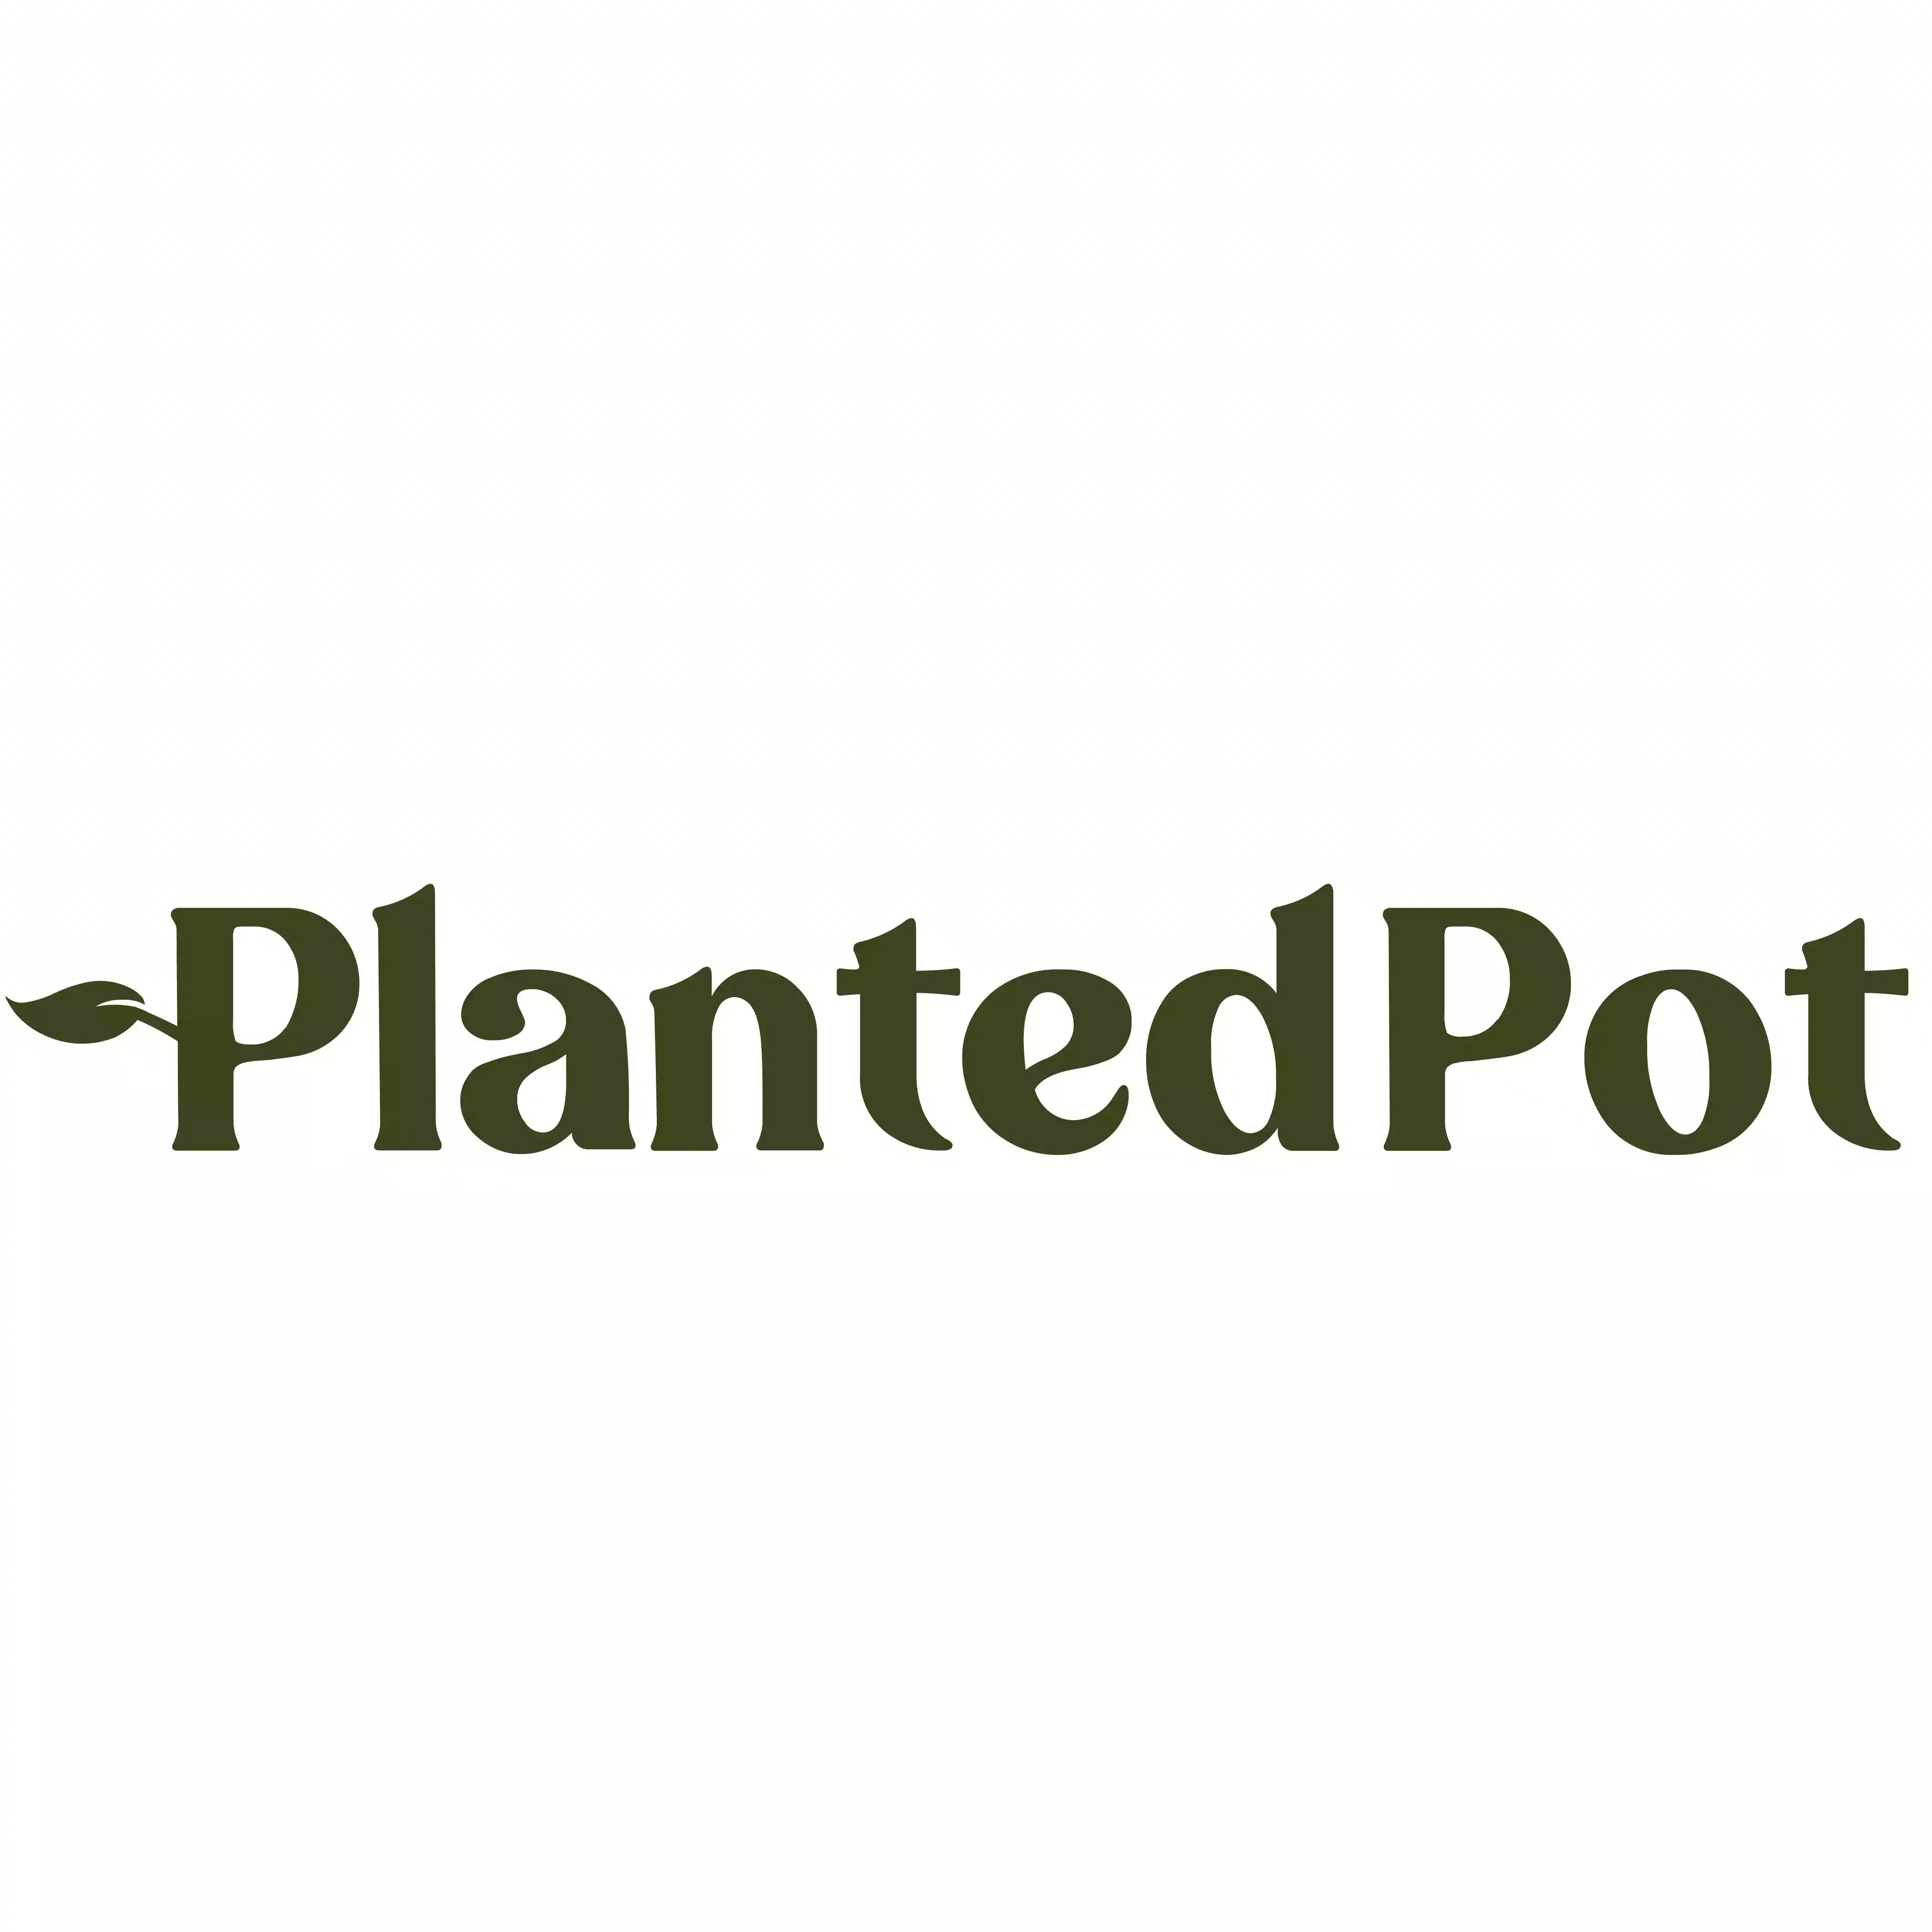 Planted Pot coupon codes